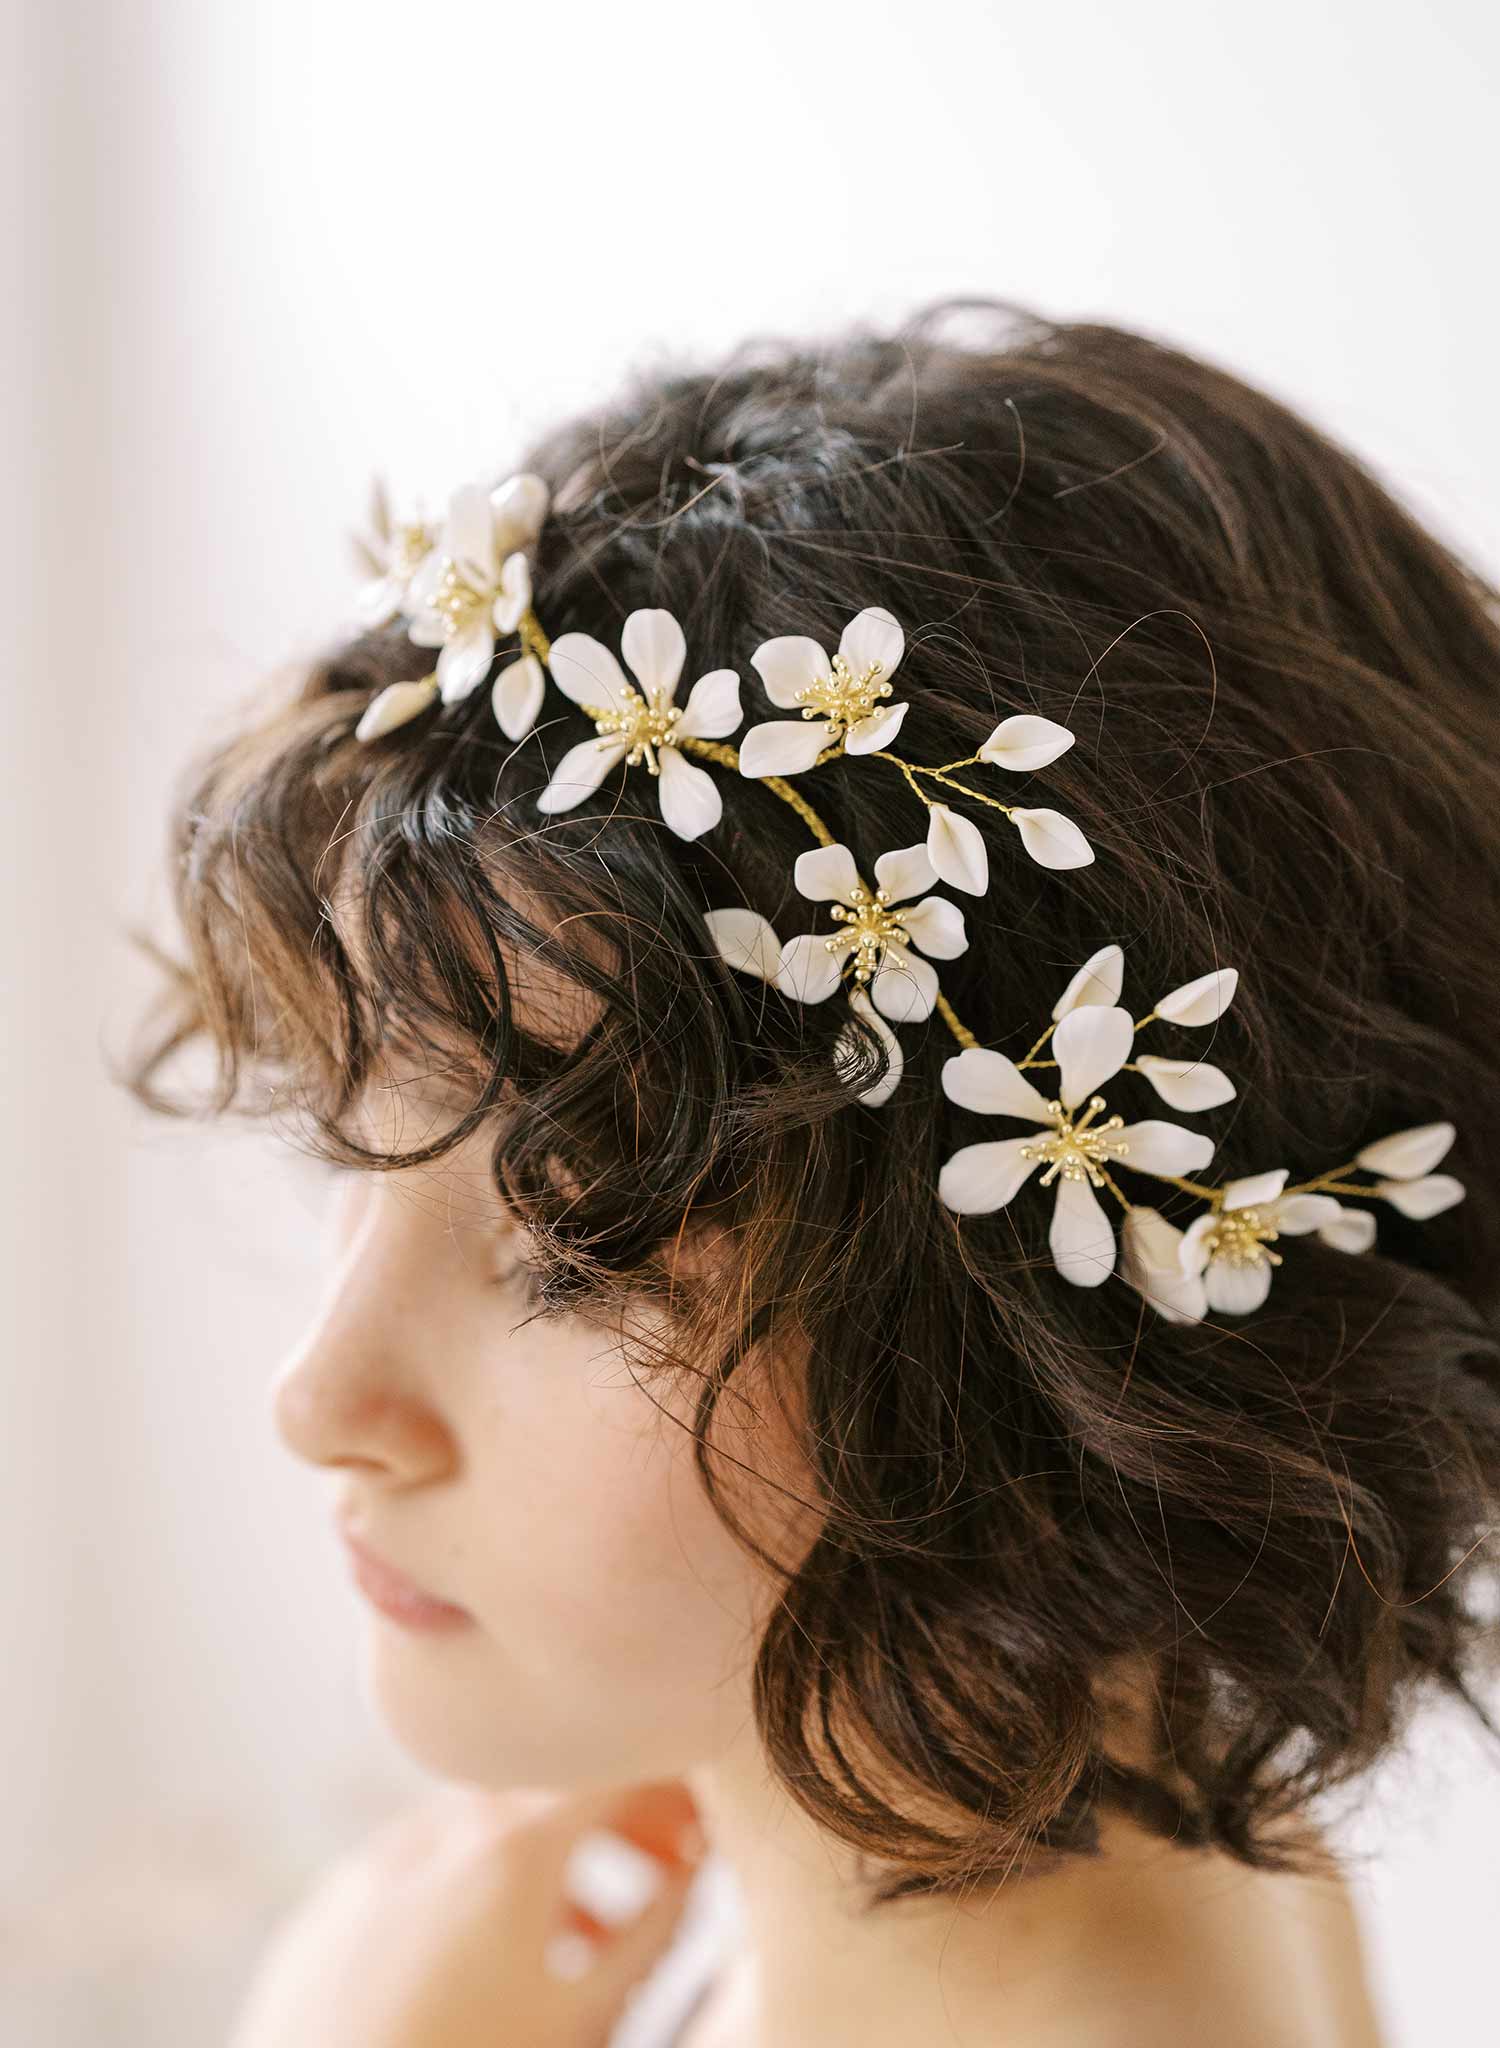 Blooming magnolia bridal hair vine - Style #2342